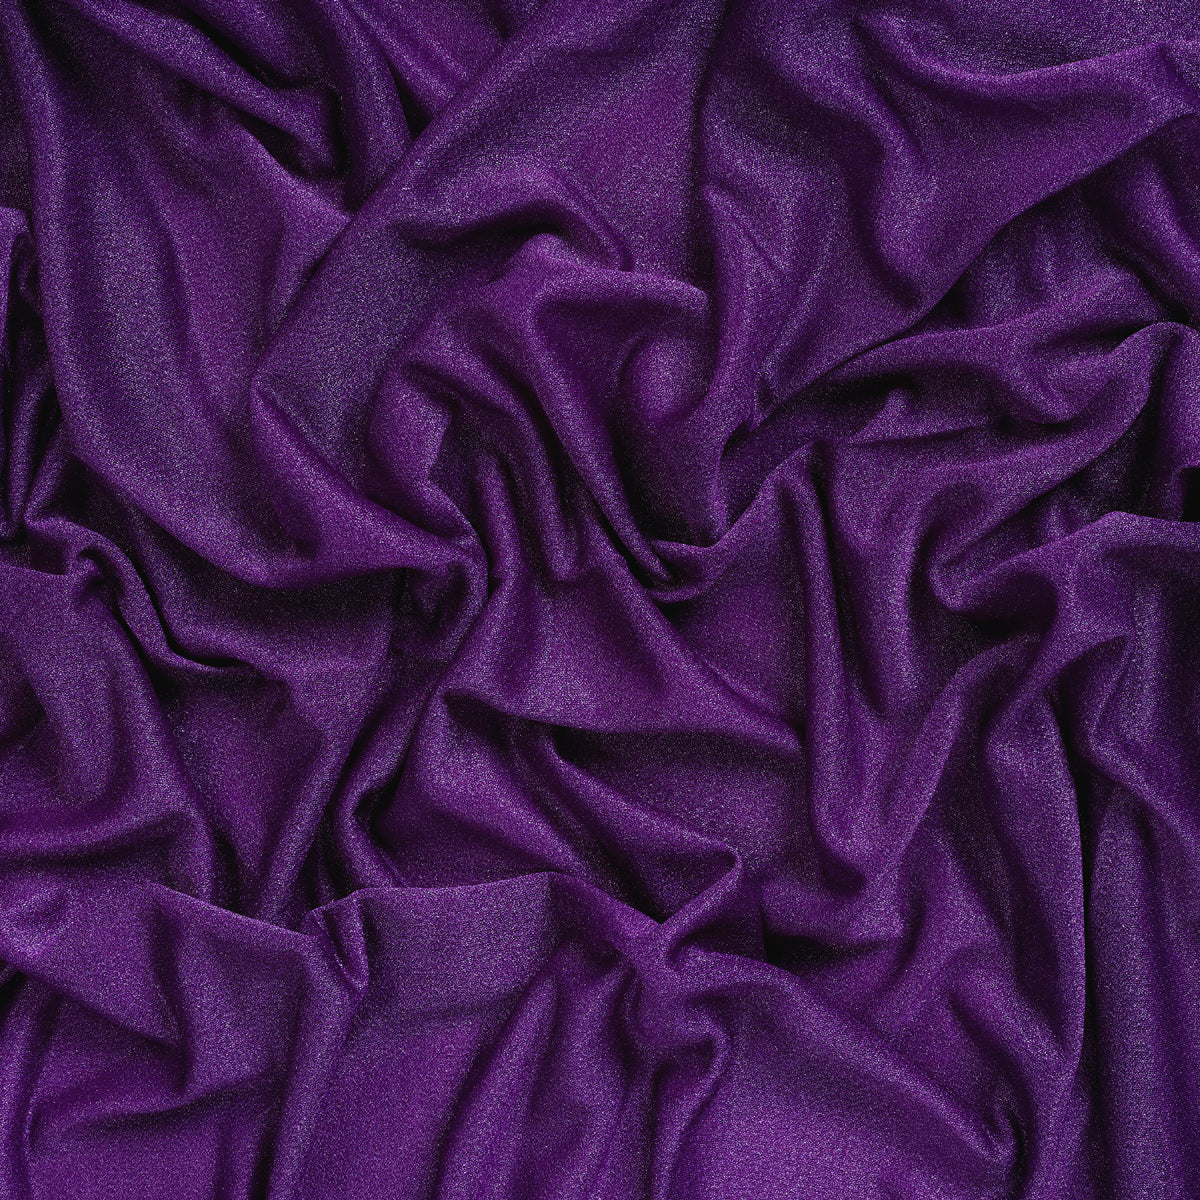 Purple,735c41c3-9c49-4a33-95f8-a37205ab4547